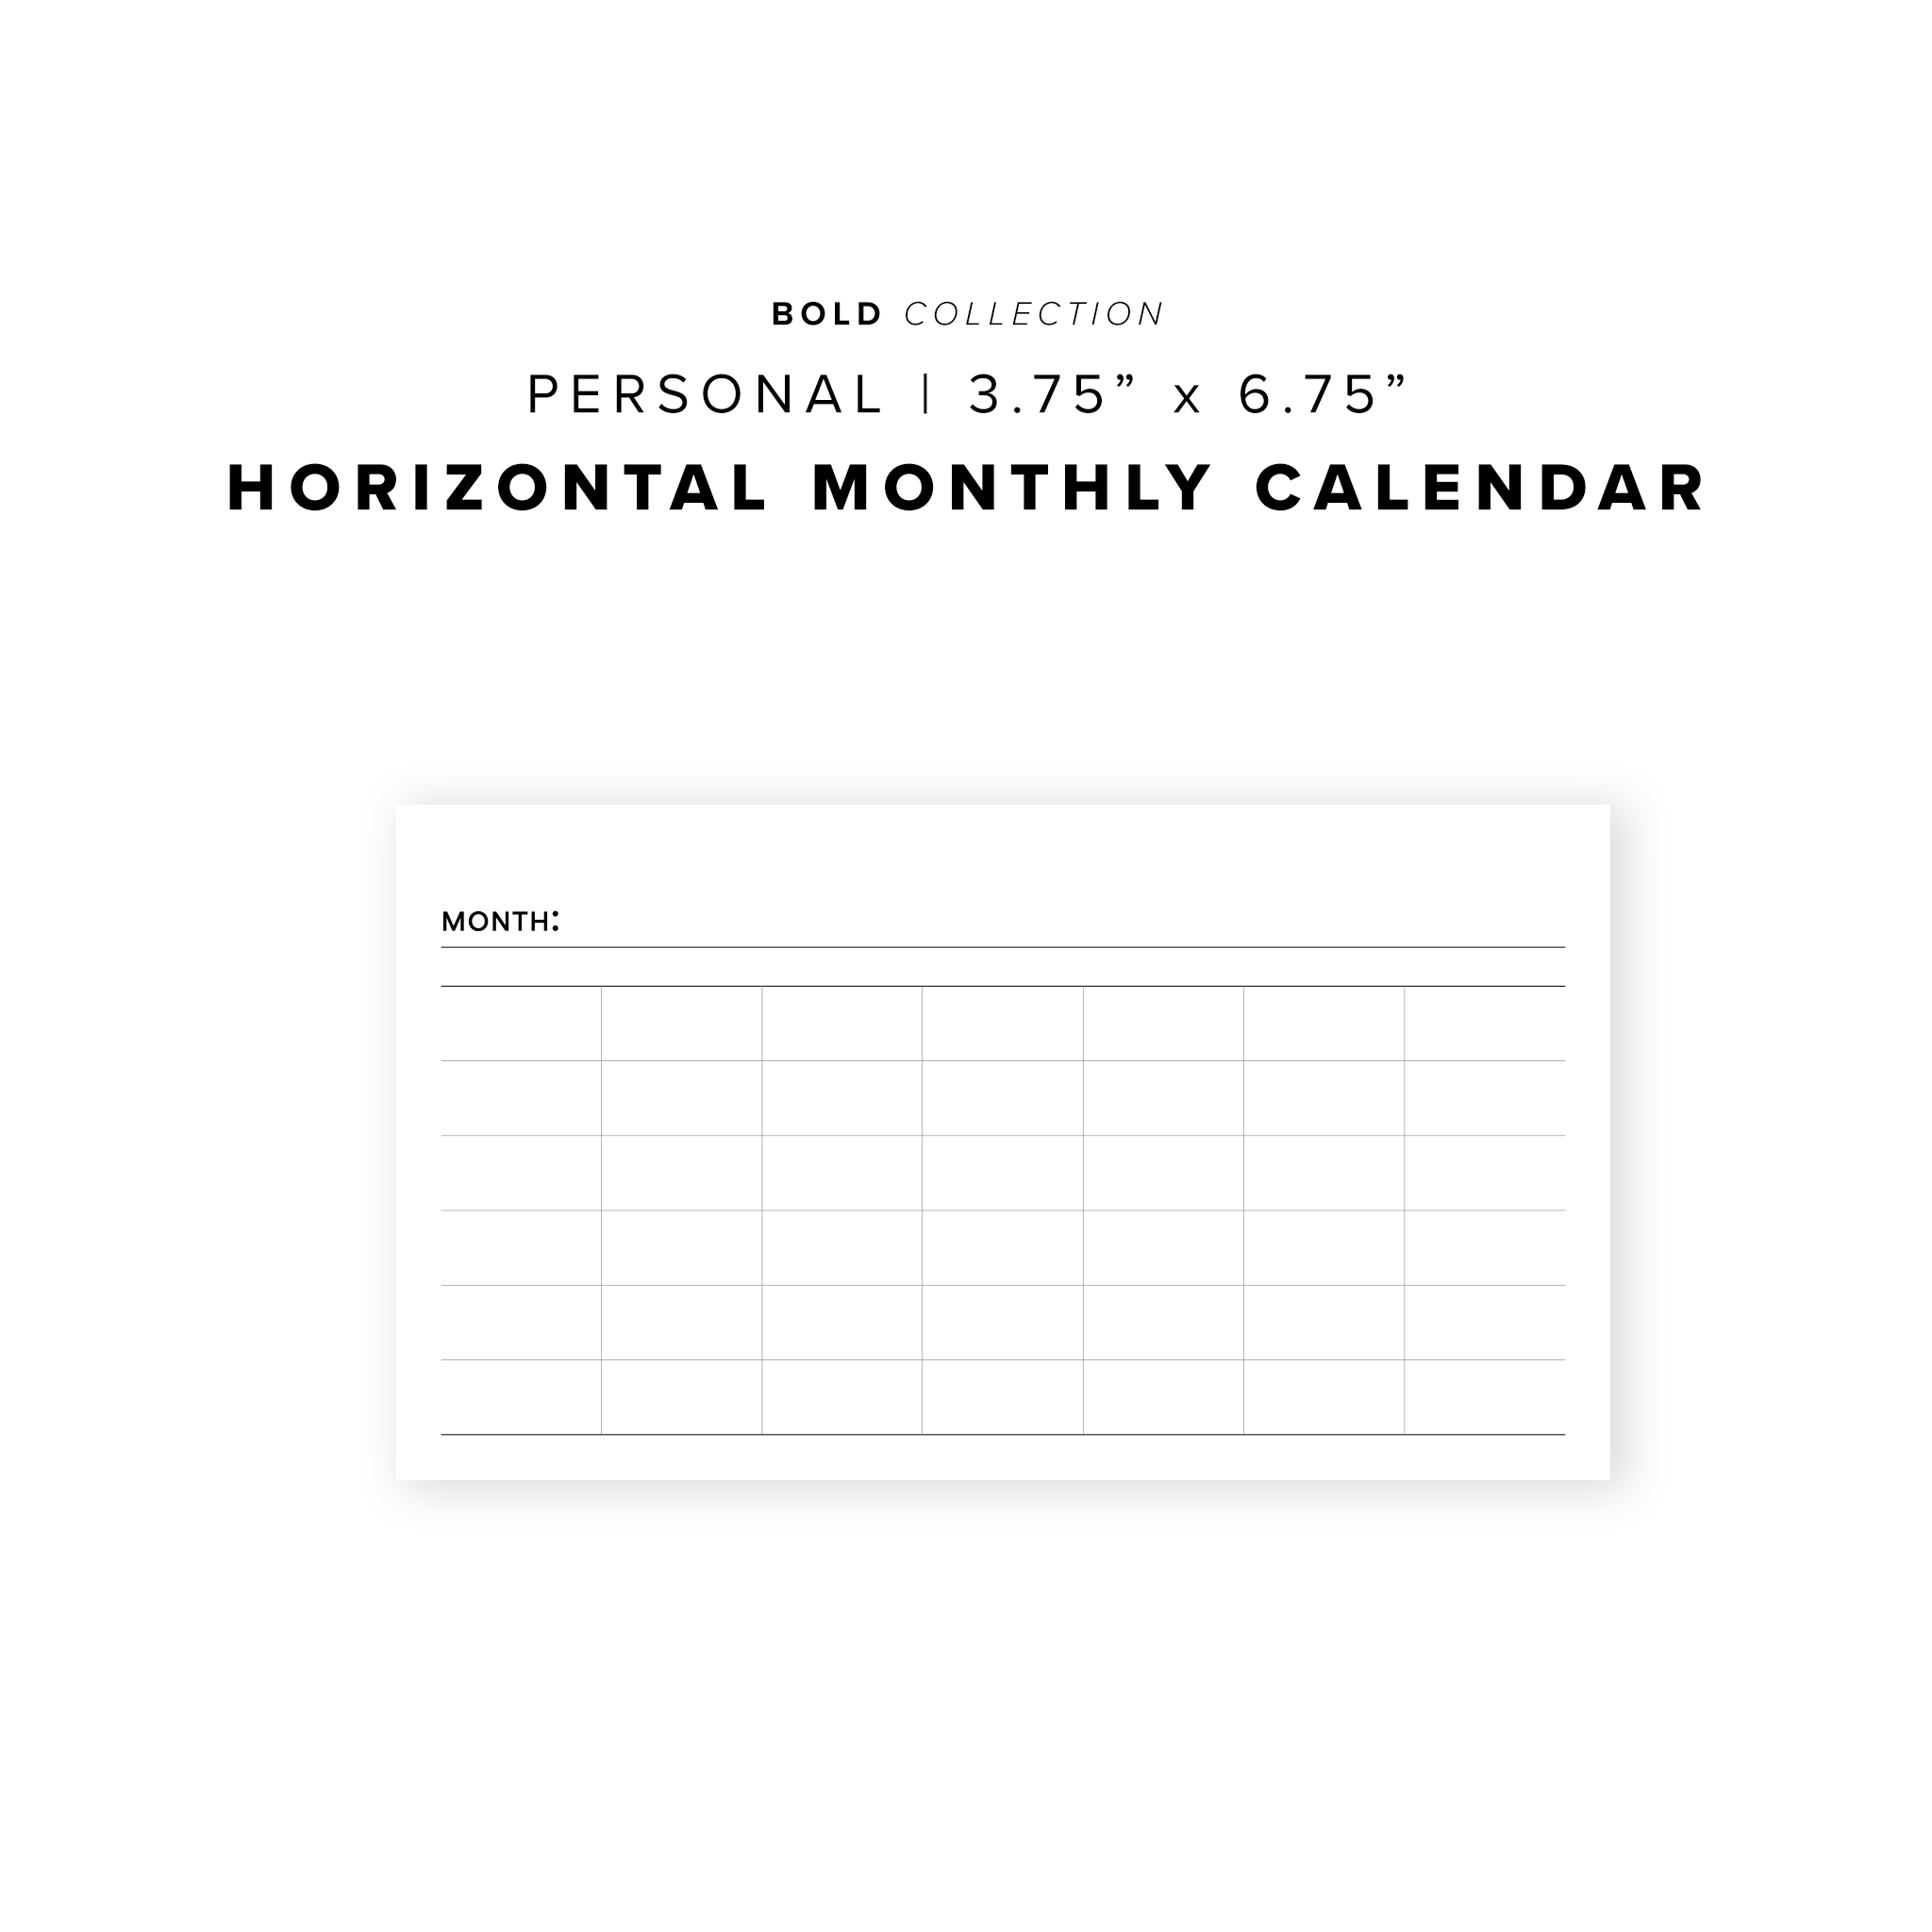 PR205 - Horizontal Monthly Calendar - Printable Insert